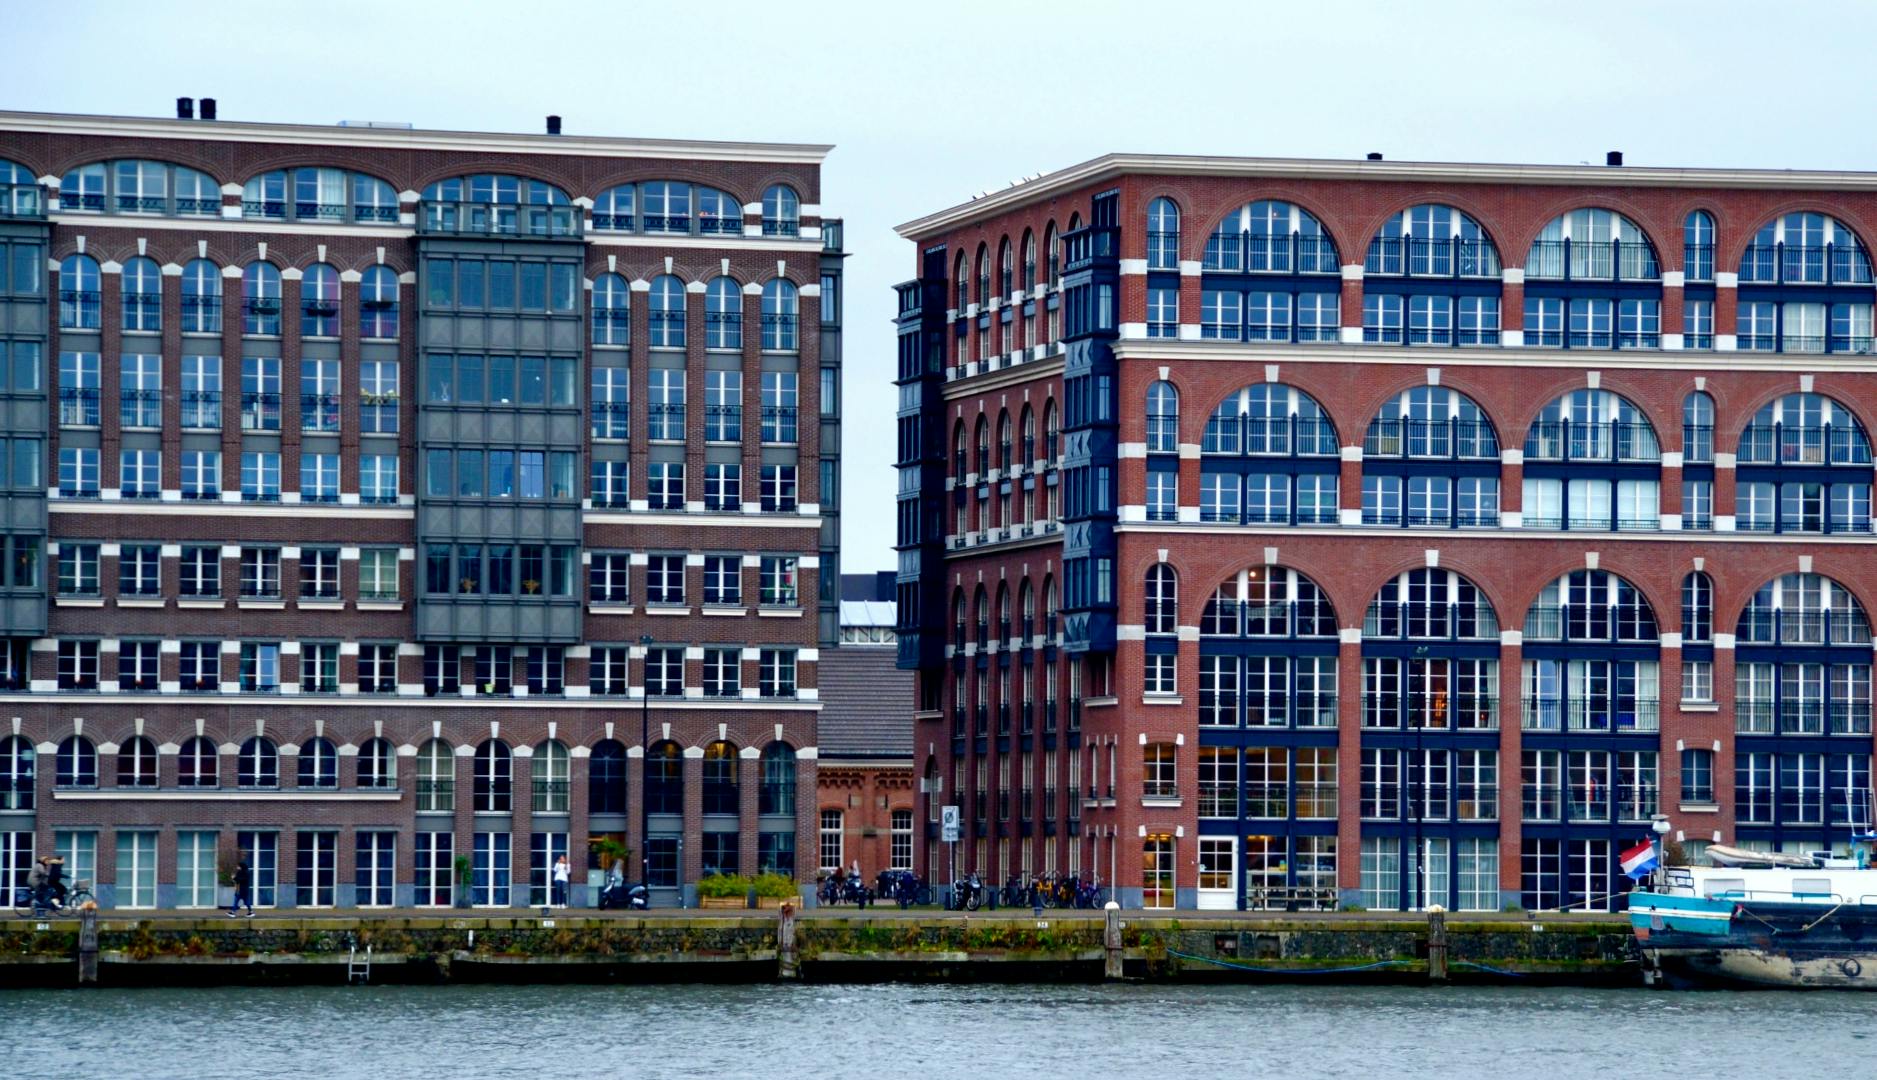 Amsterdam Architecture_Warehouses.jpg